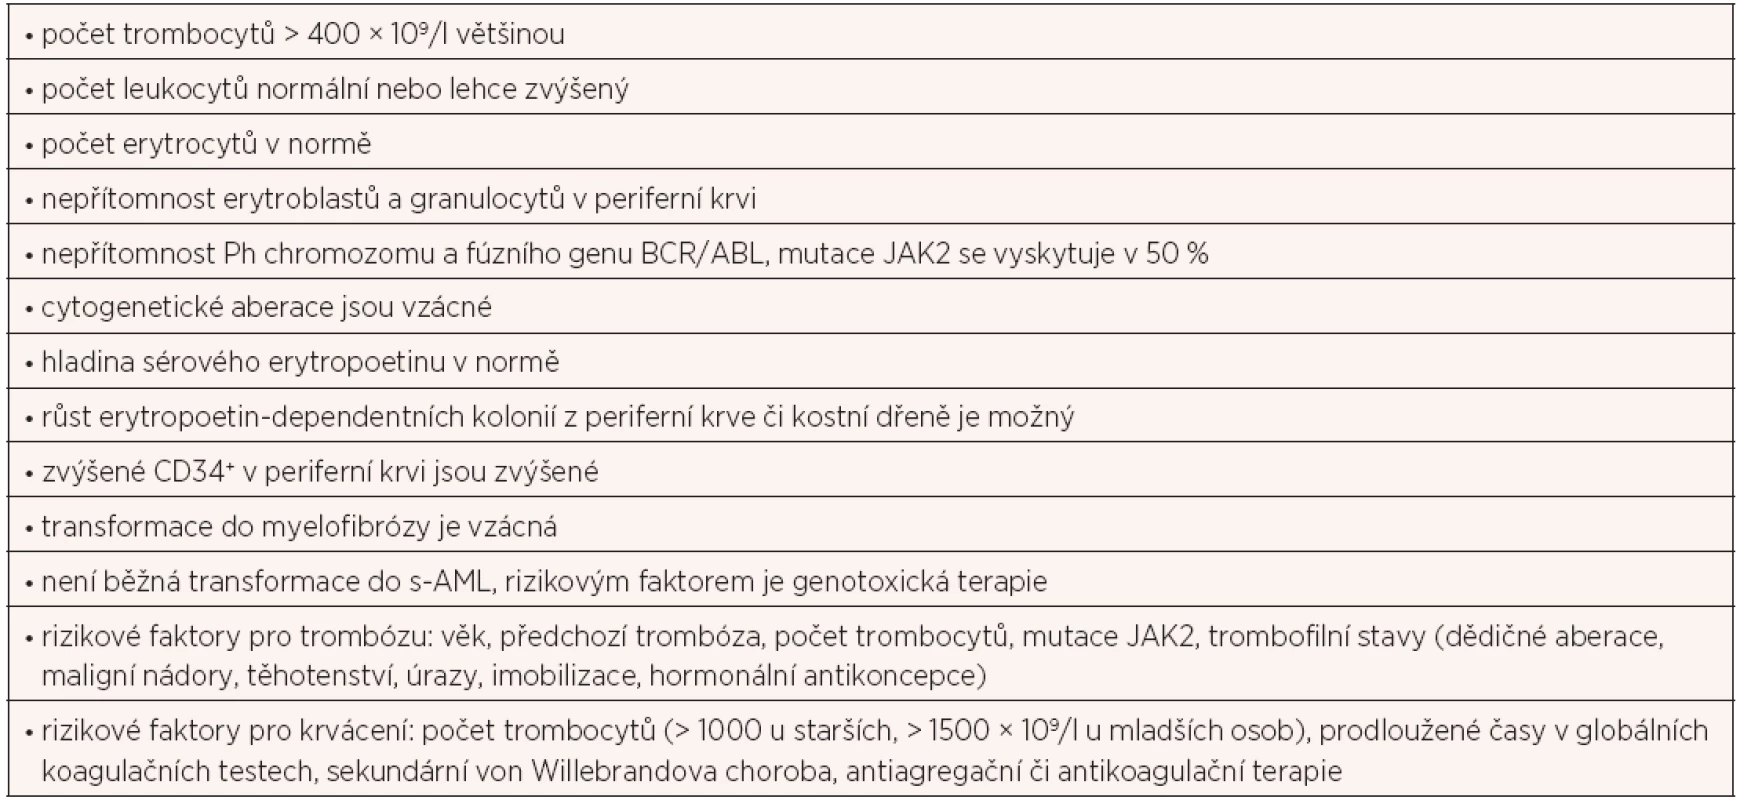 Typické rysy esenciální trombocytémie